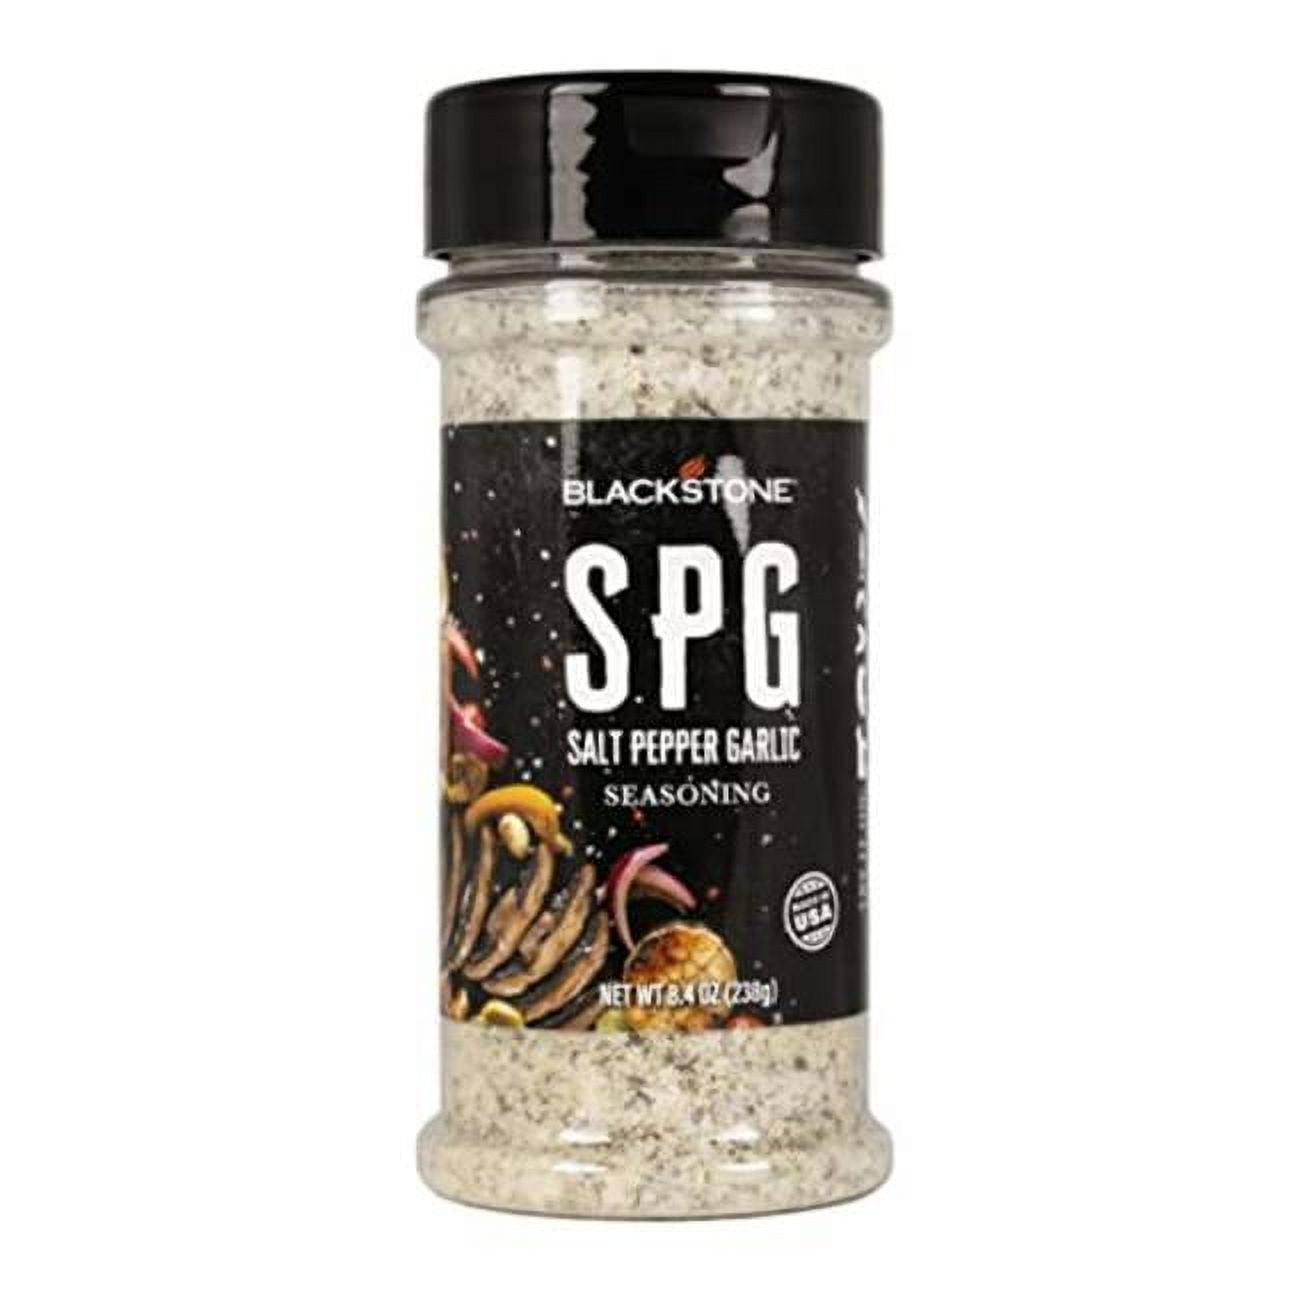 Blackstone SPG 8.4 oz. Seasoning